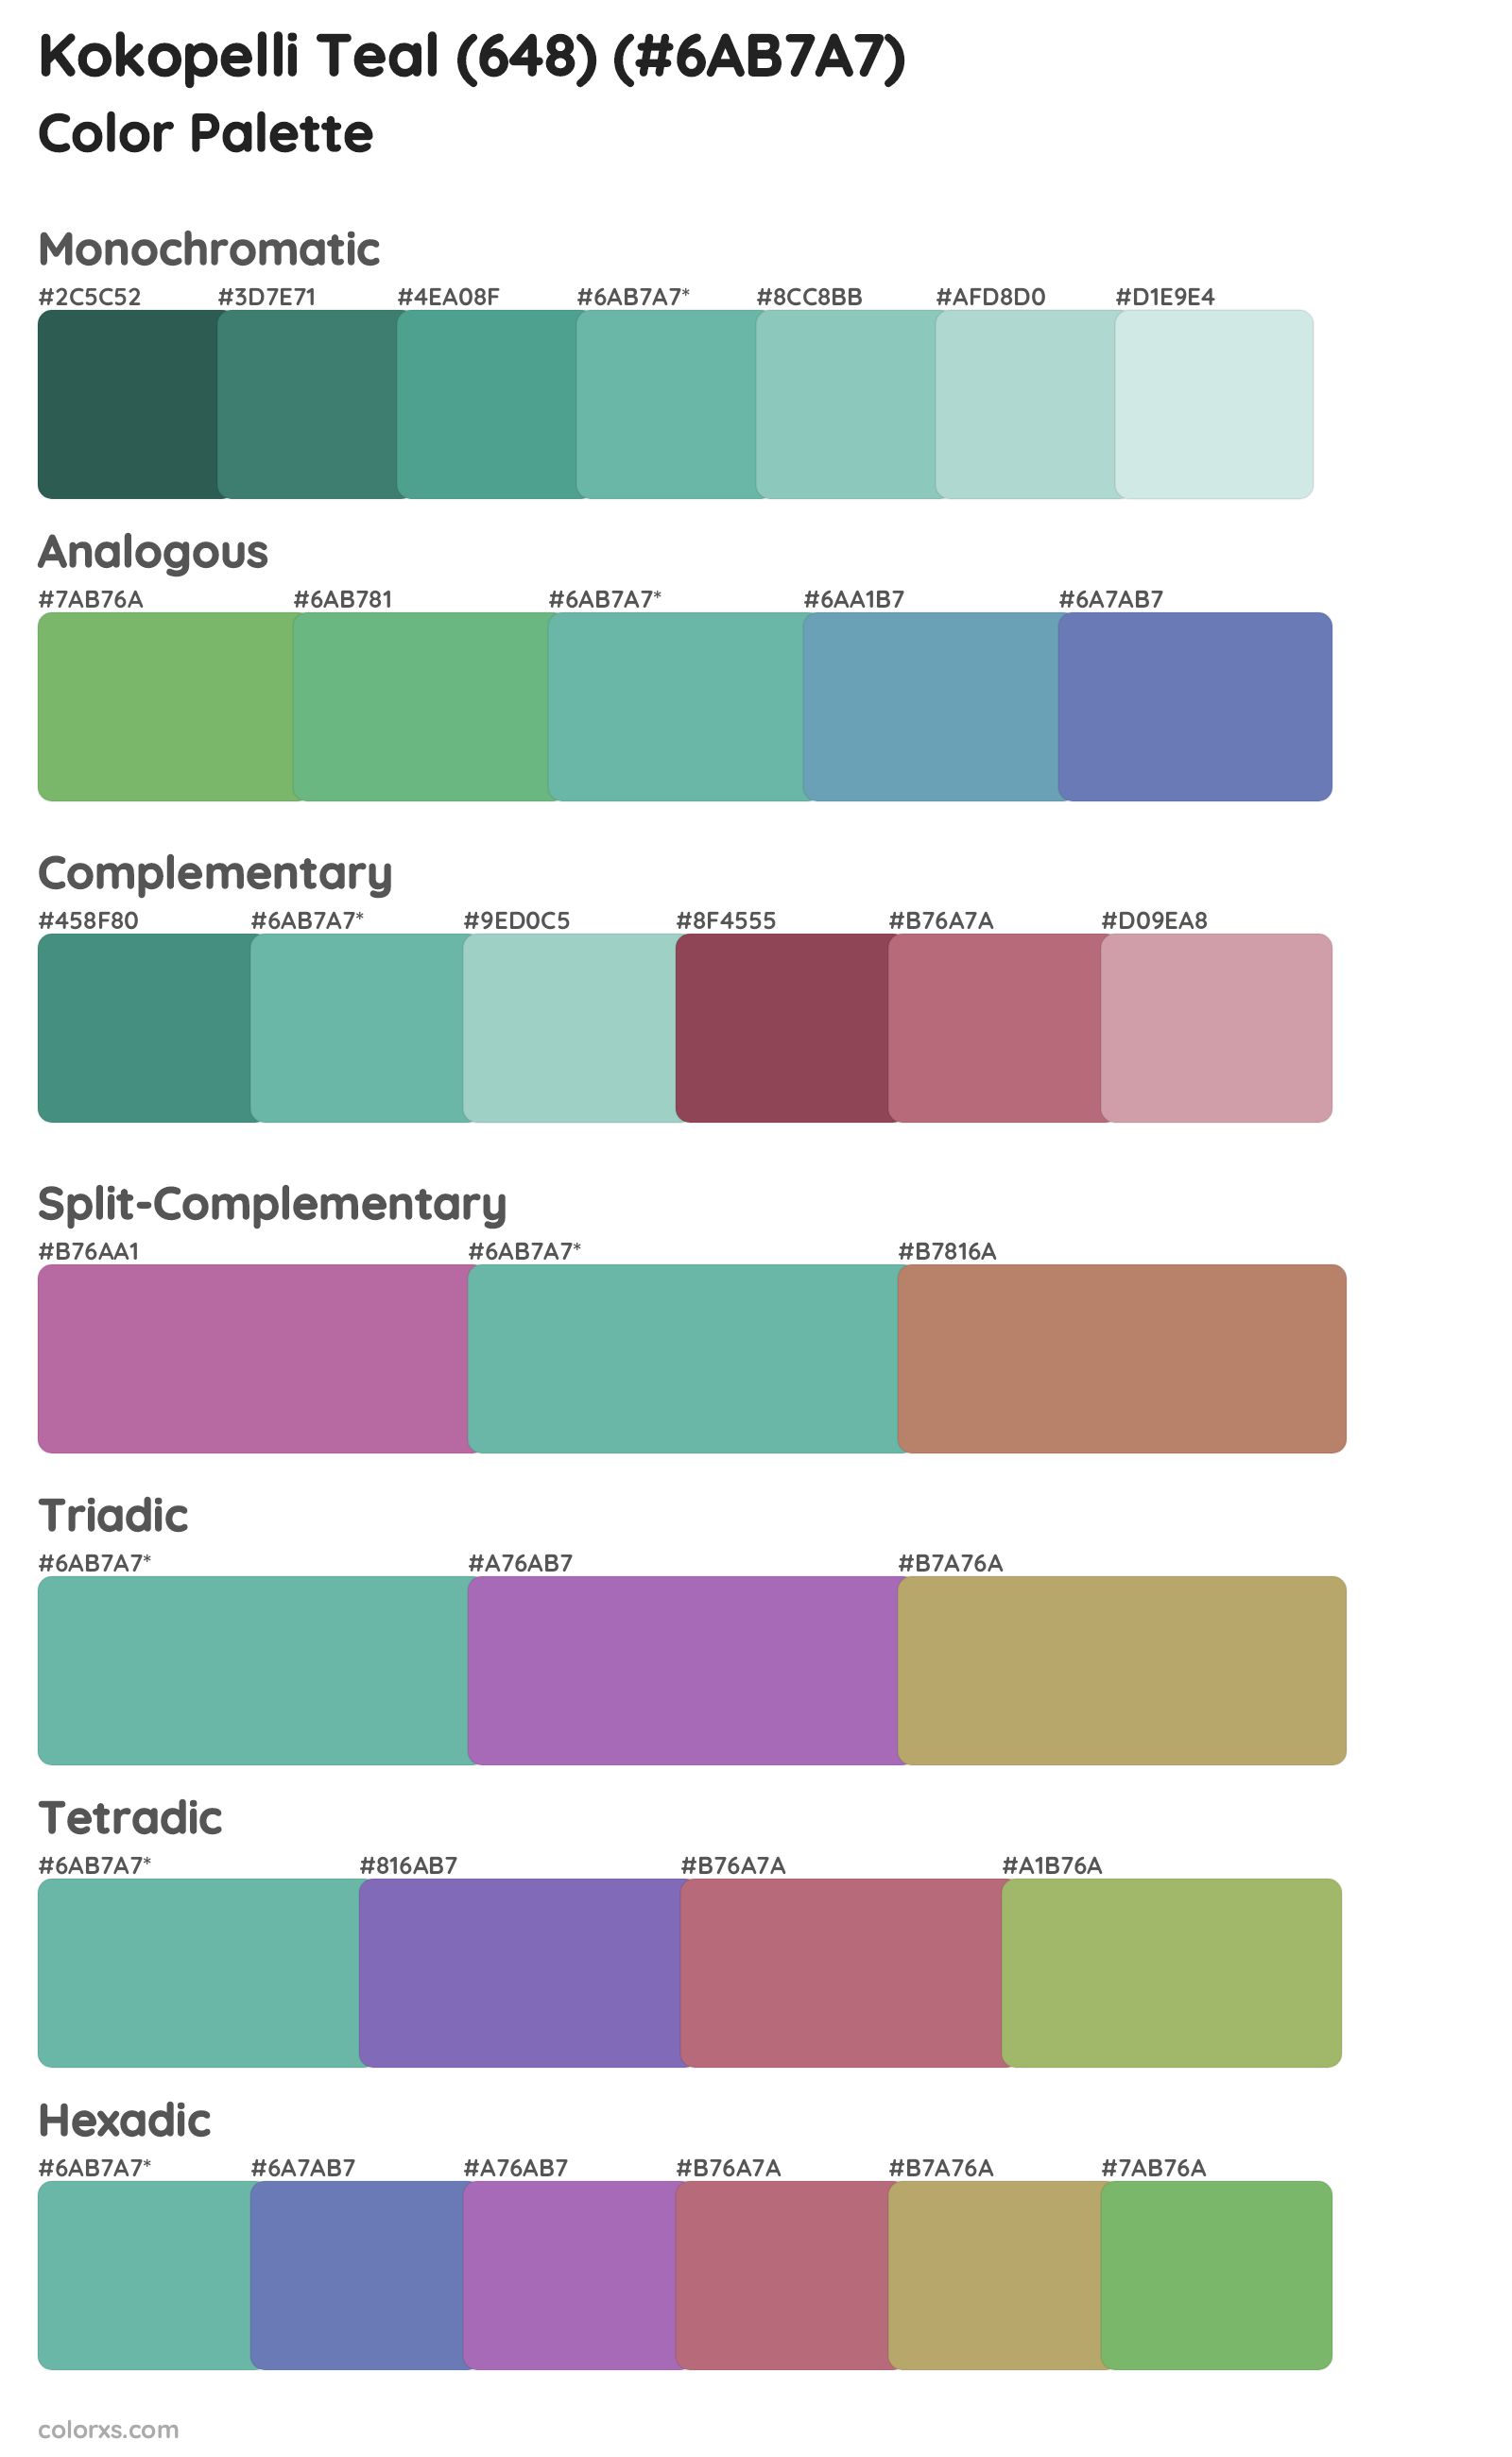 Kokopelli Teal (648) Color Scheme Palettes